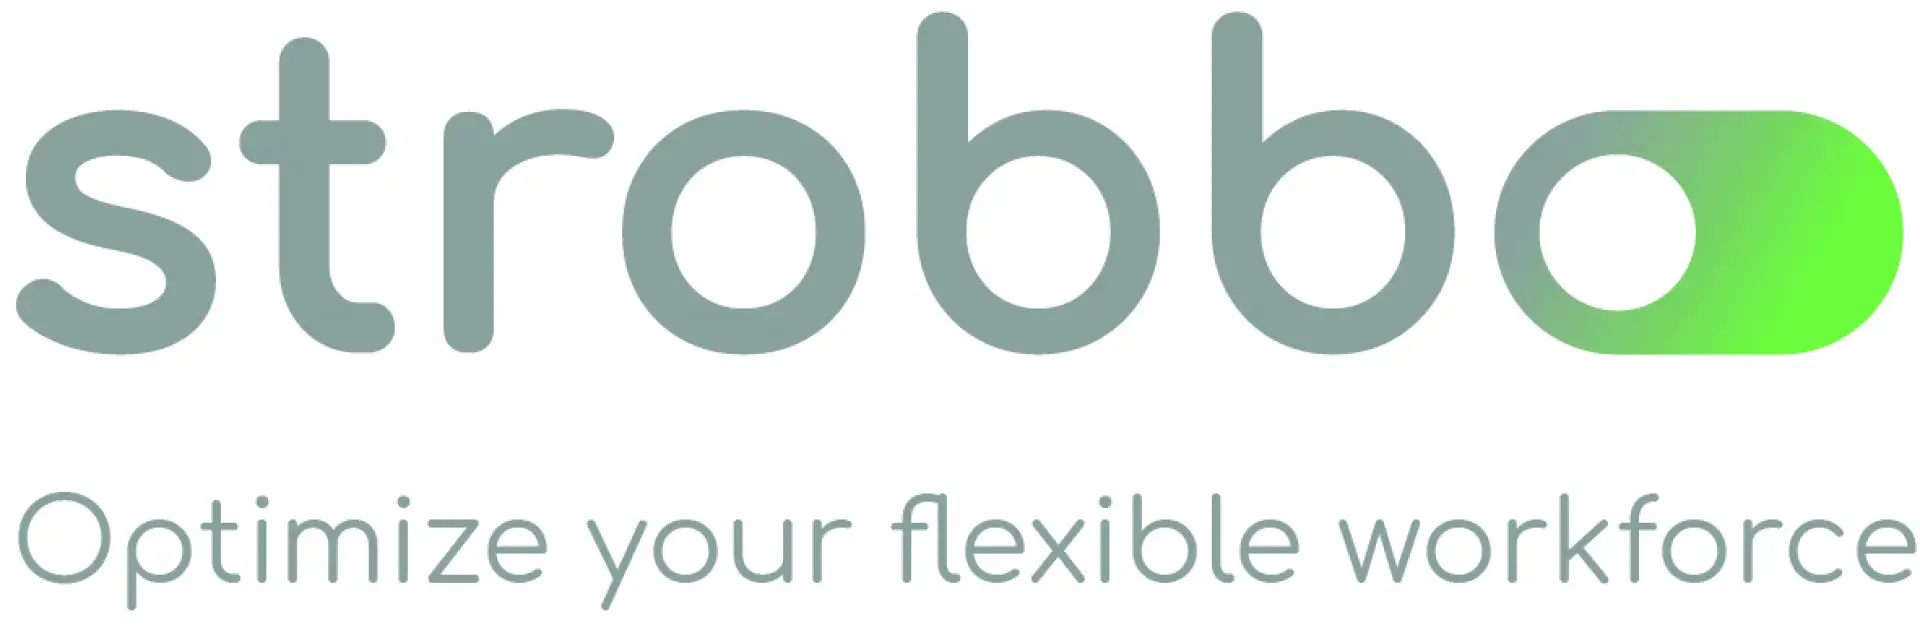 Logo Strobbo